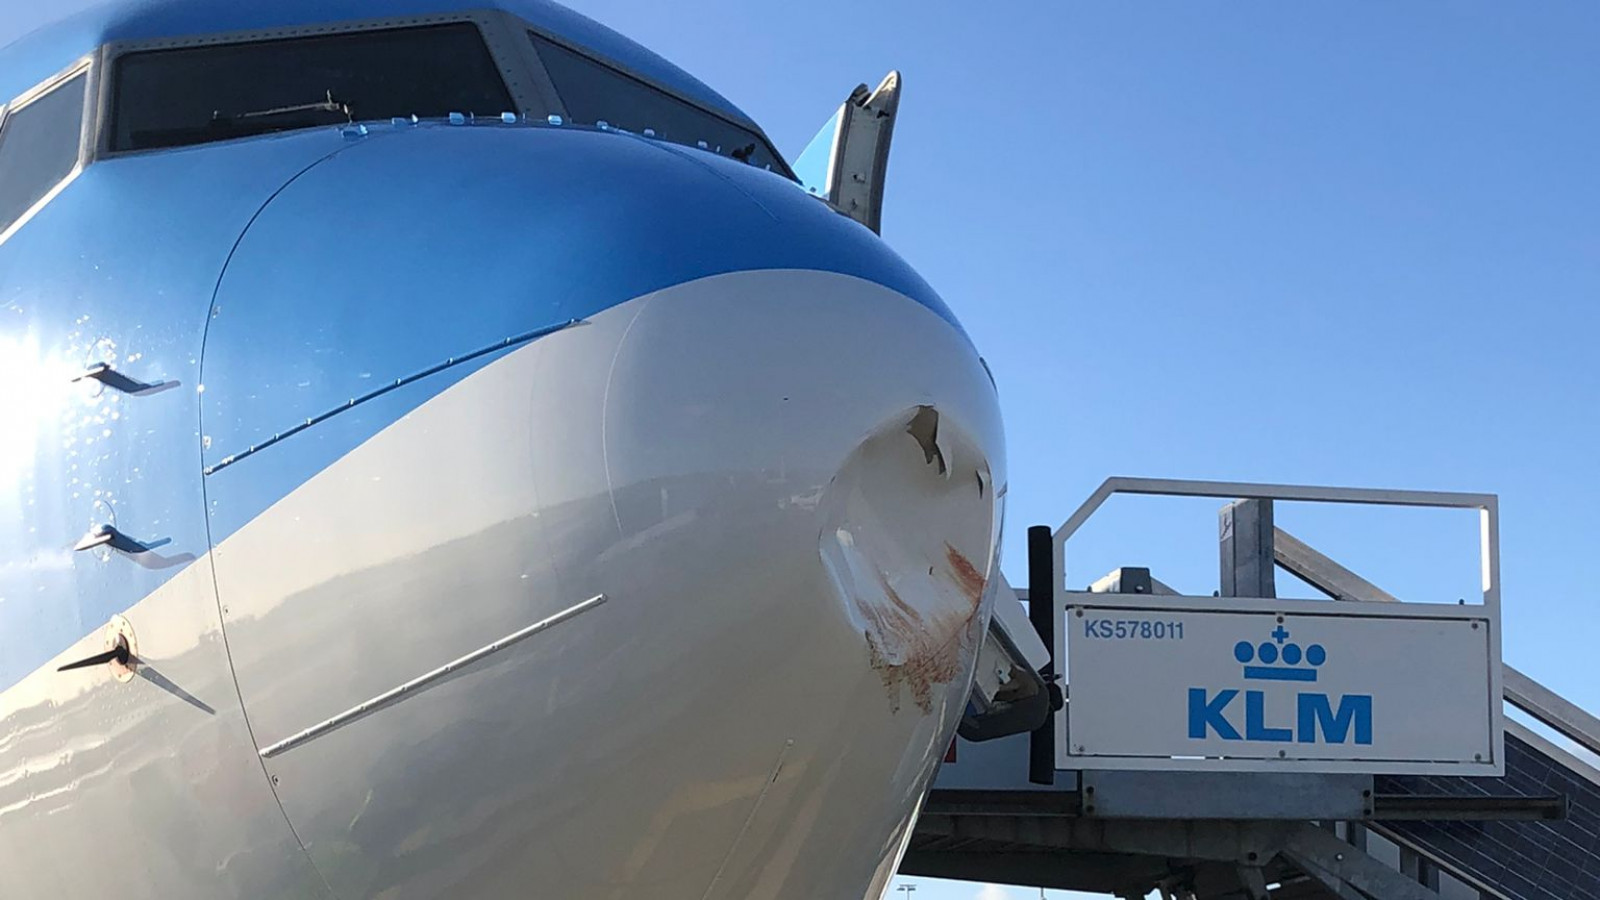 Vulgariteit bewaker Cornwall Vliegtuig van TUI terug naar Schiphol na botsing met meeuwen; schade aan  neus van toestel - NH Nieuws